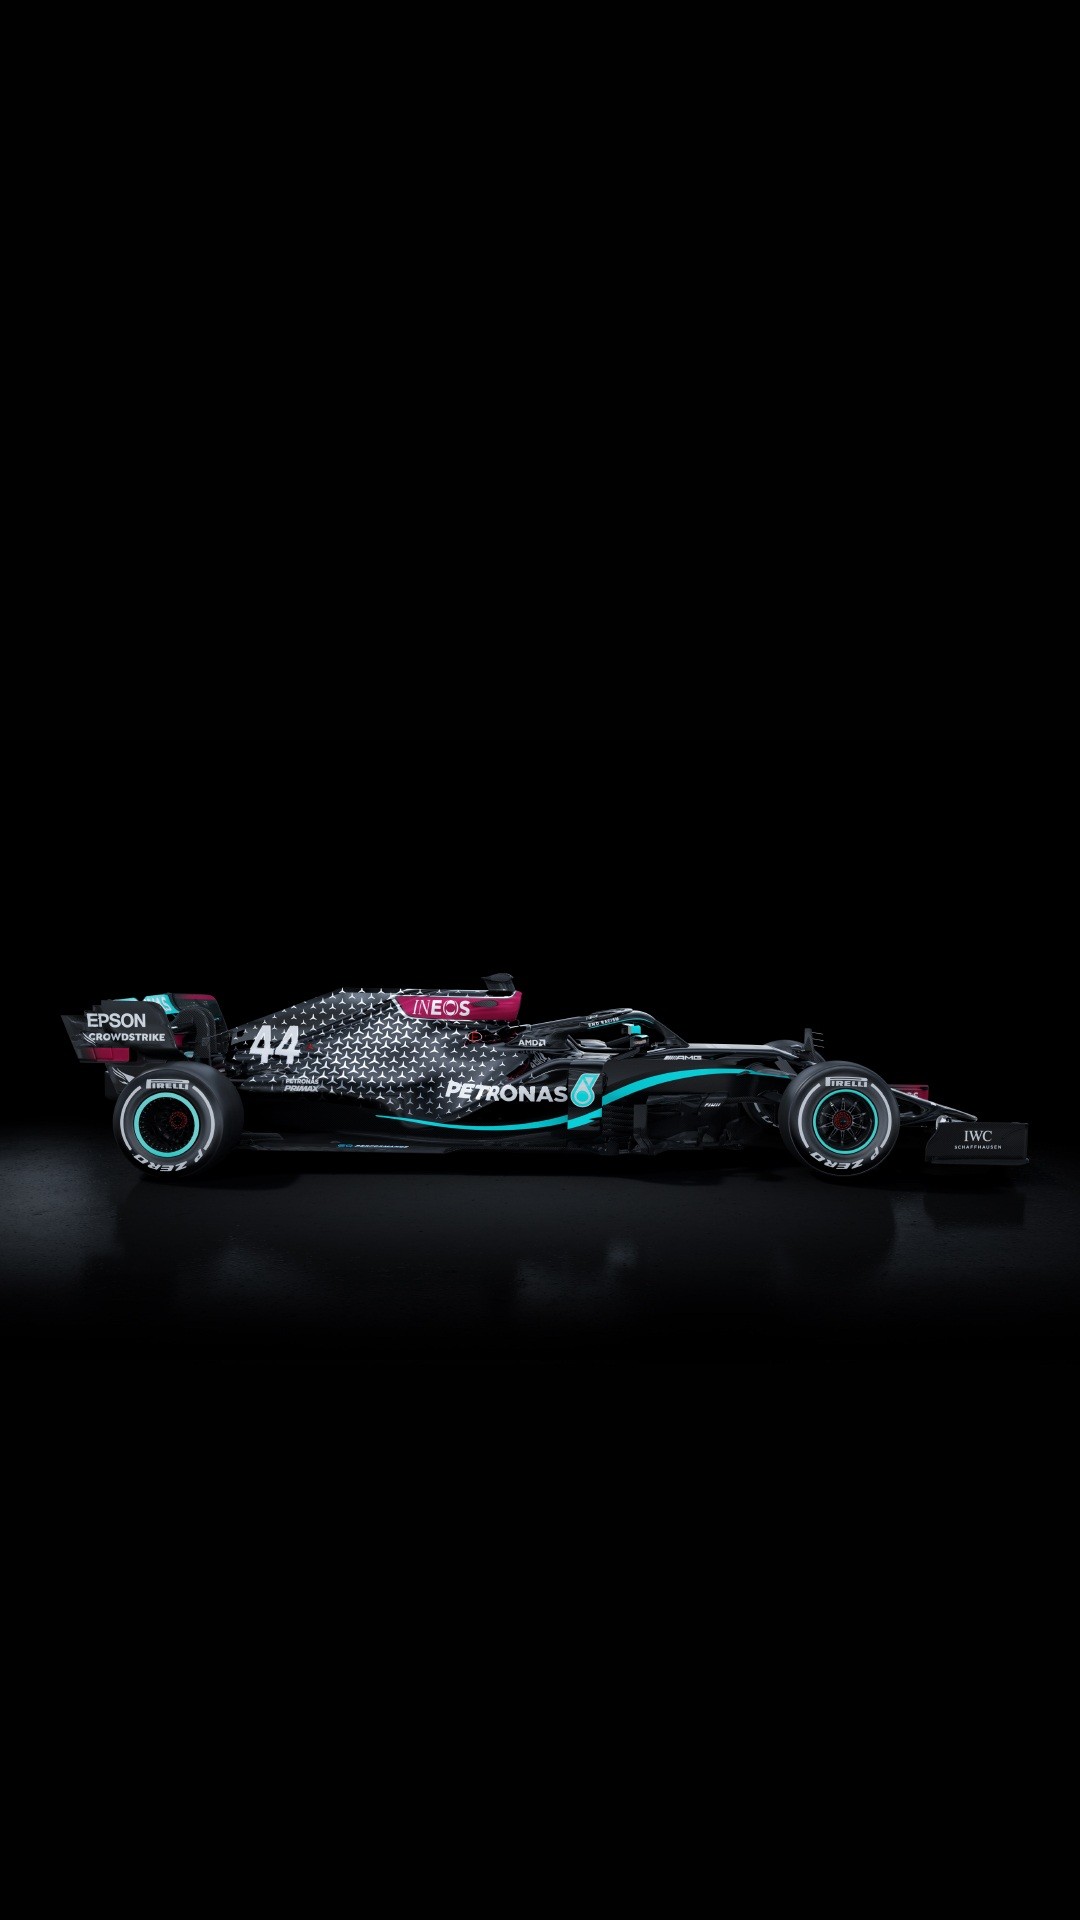 Lewis Hamilton's Car Wallpaper